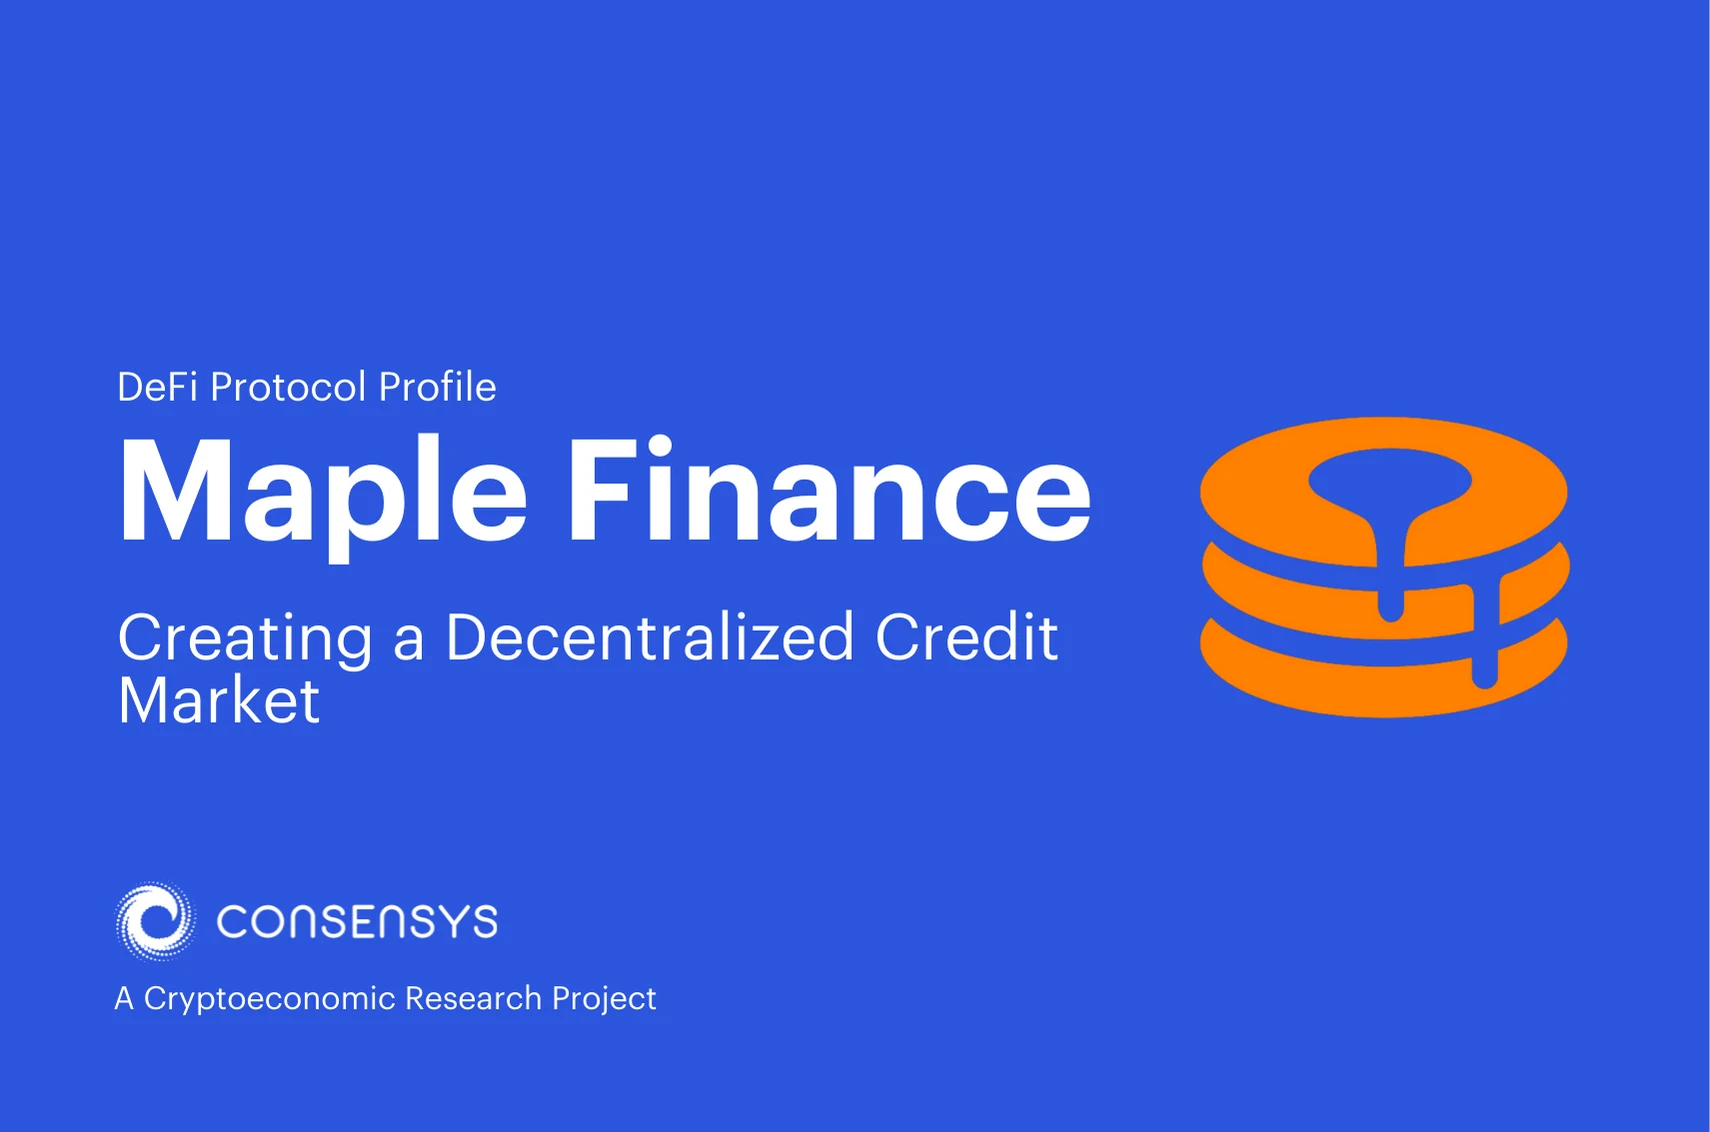 Image: Maple Finance: Creating a Decentralized Credit Market